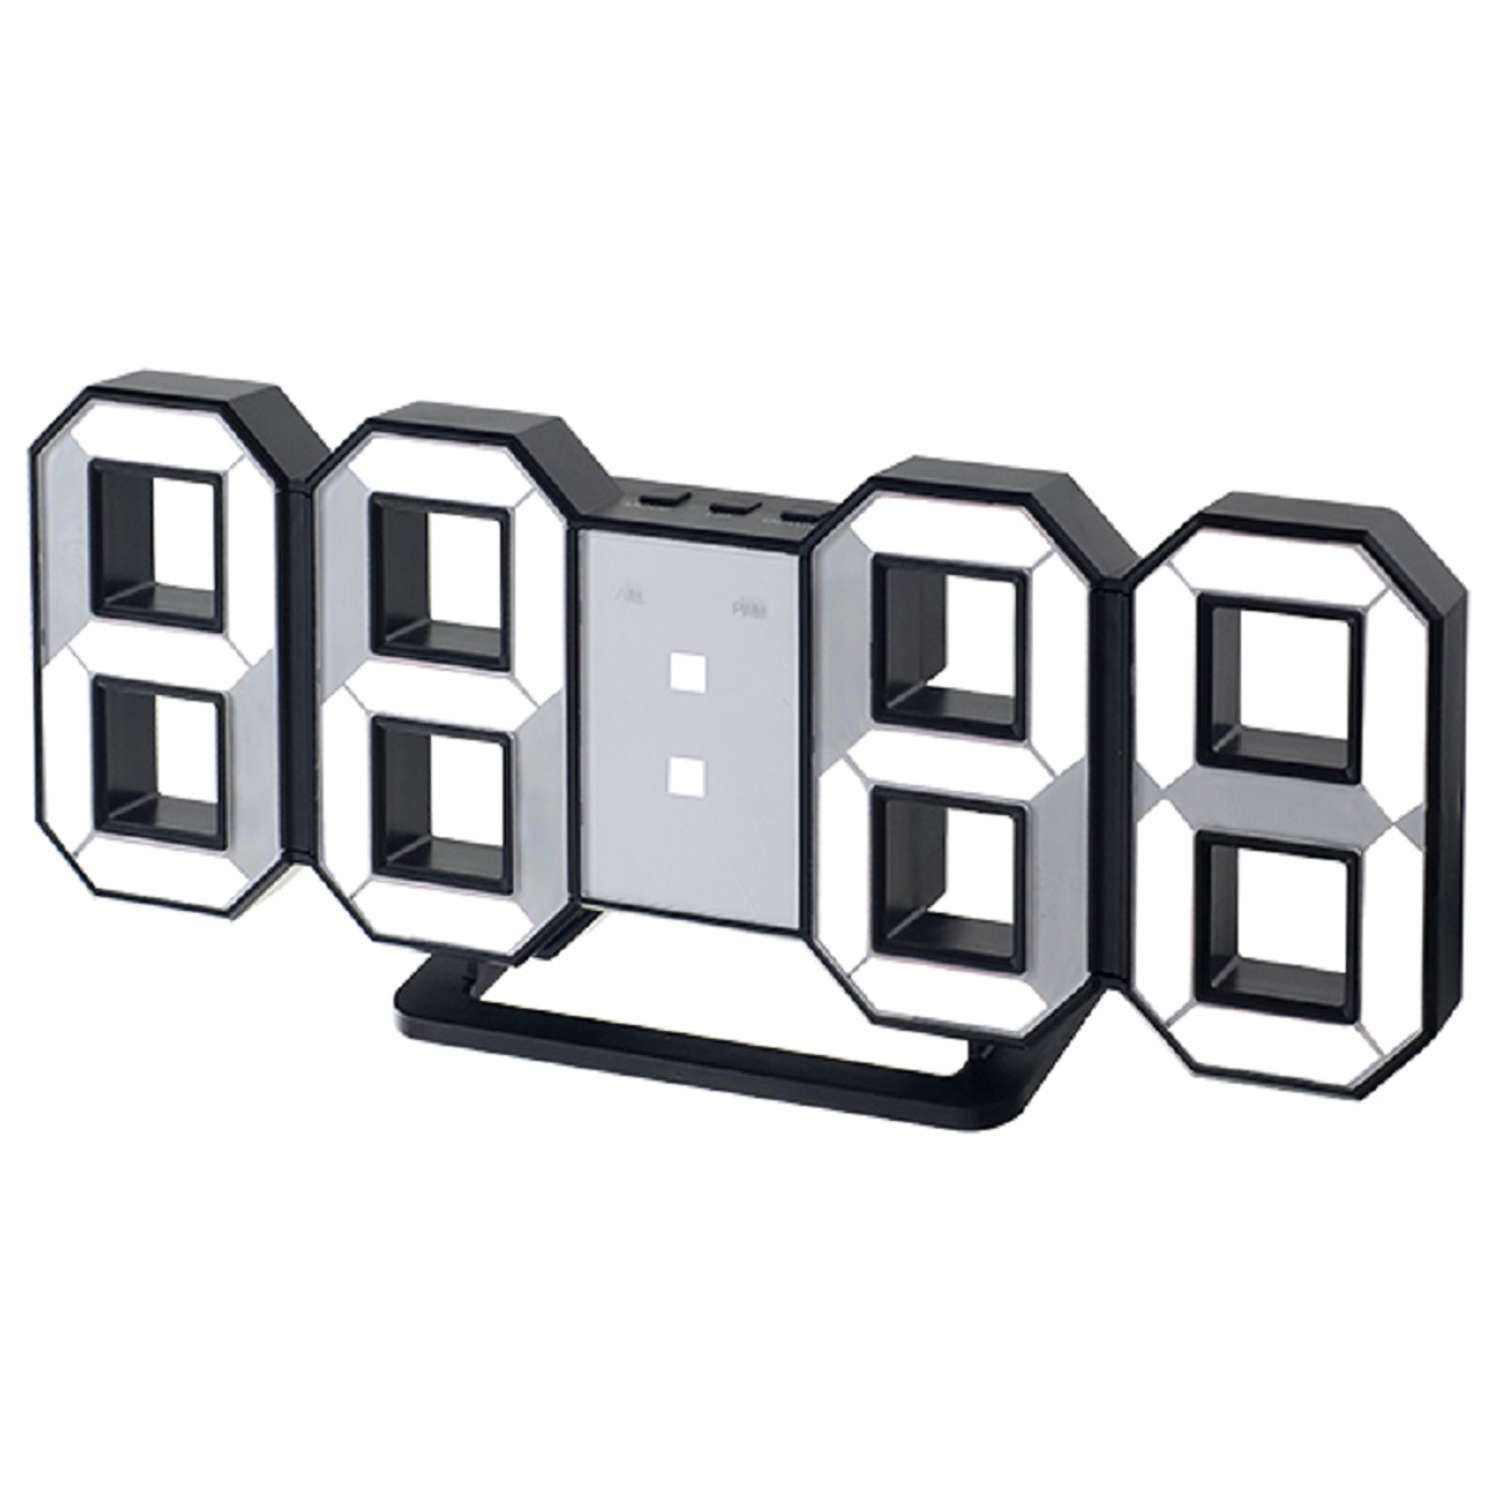 LED часы-будильник Perfeo LUMINOUS черный корпус белая подсветка PF-663 - фото 1